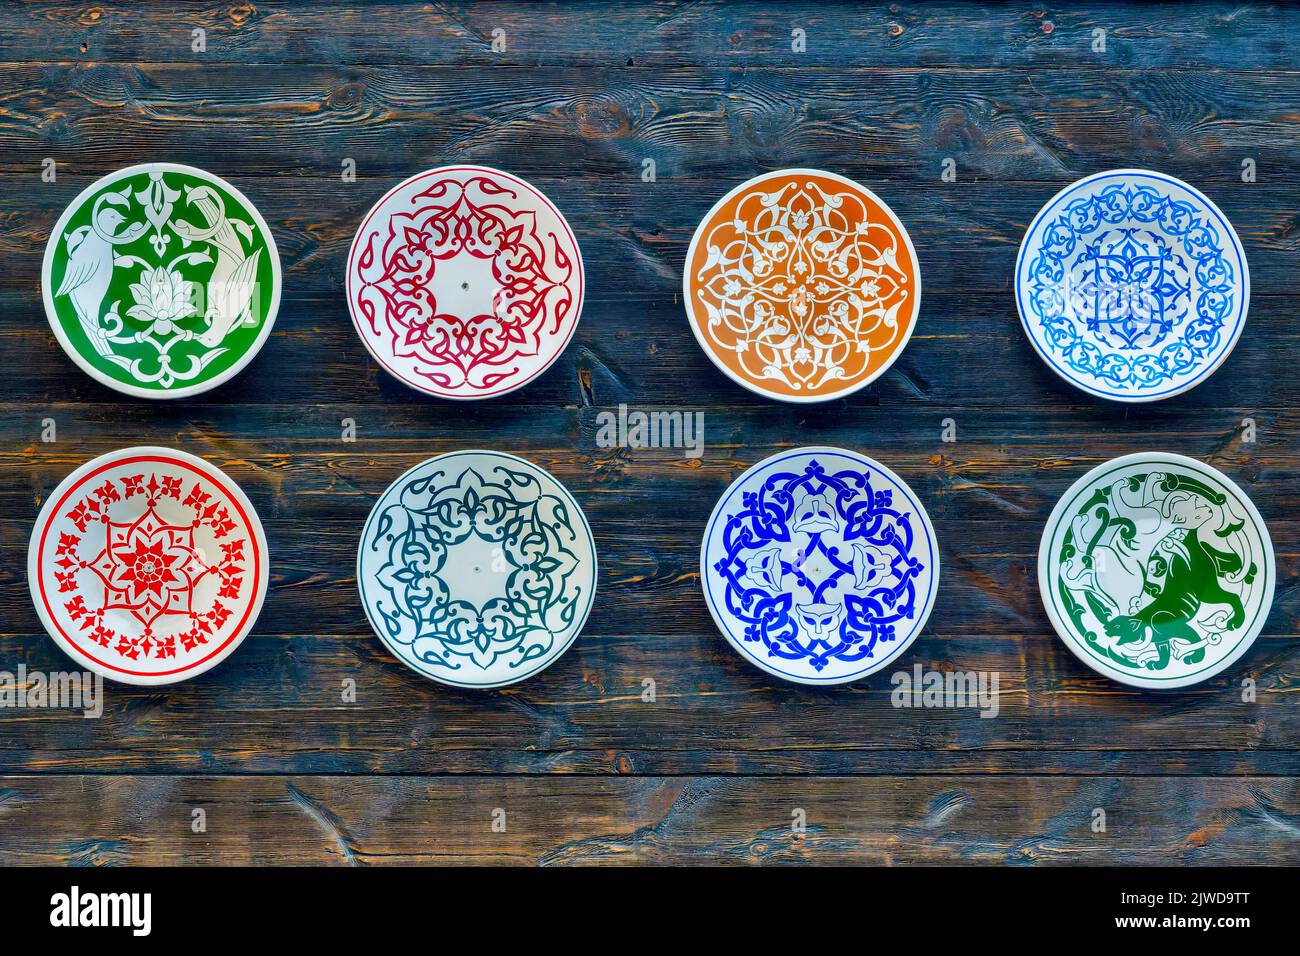 Azerbaijani plates with traditional designs Stock Photo